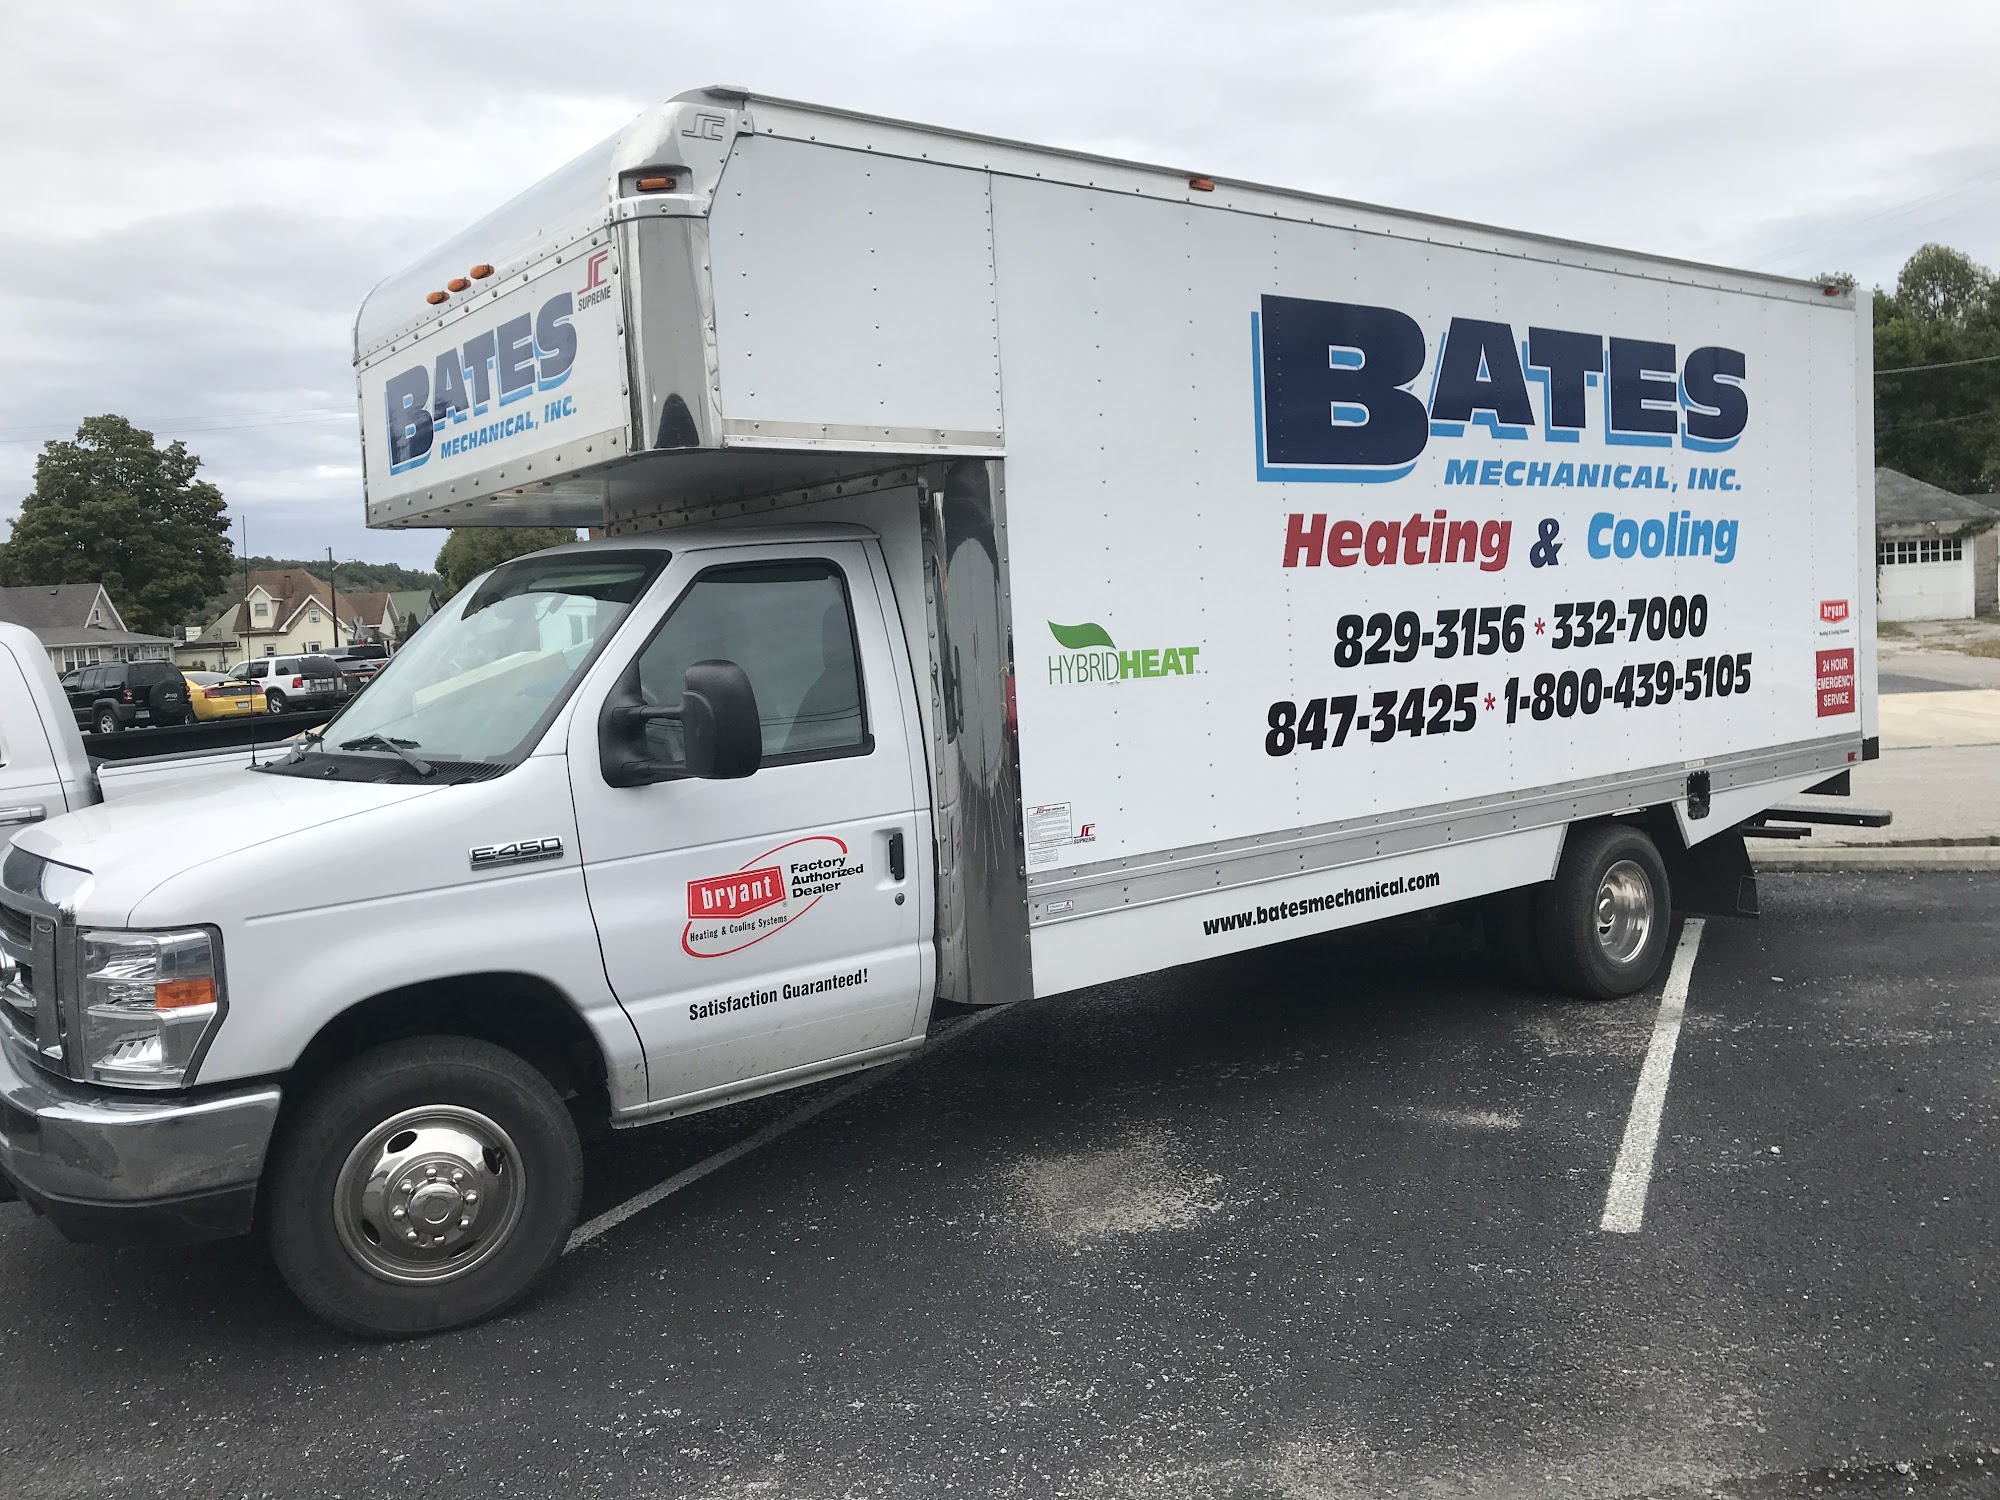 Bates Mechanical, Inc. Heating & Cooling 5738 Main St, Freedom Indiana 47431